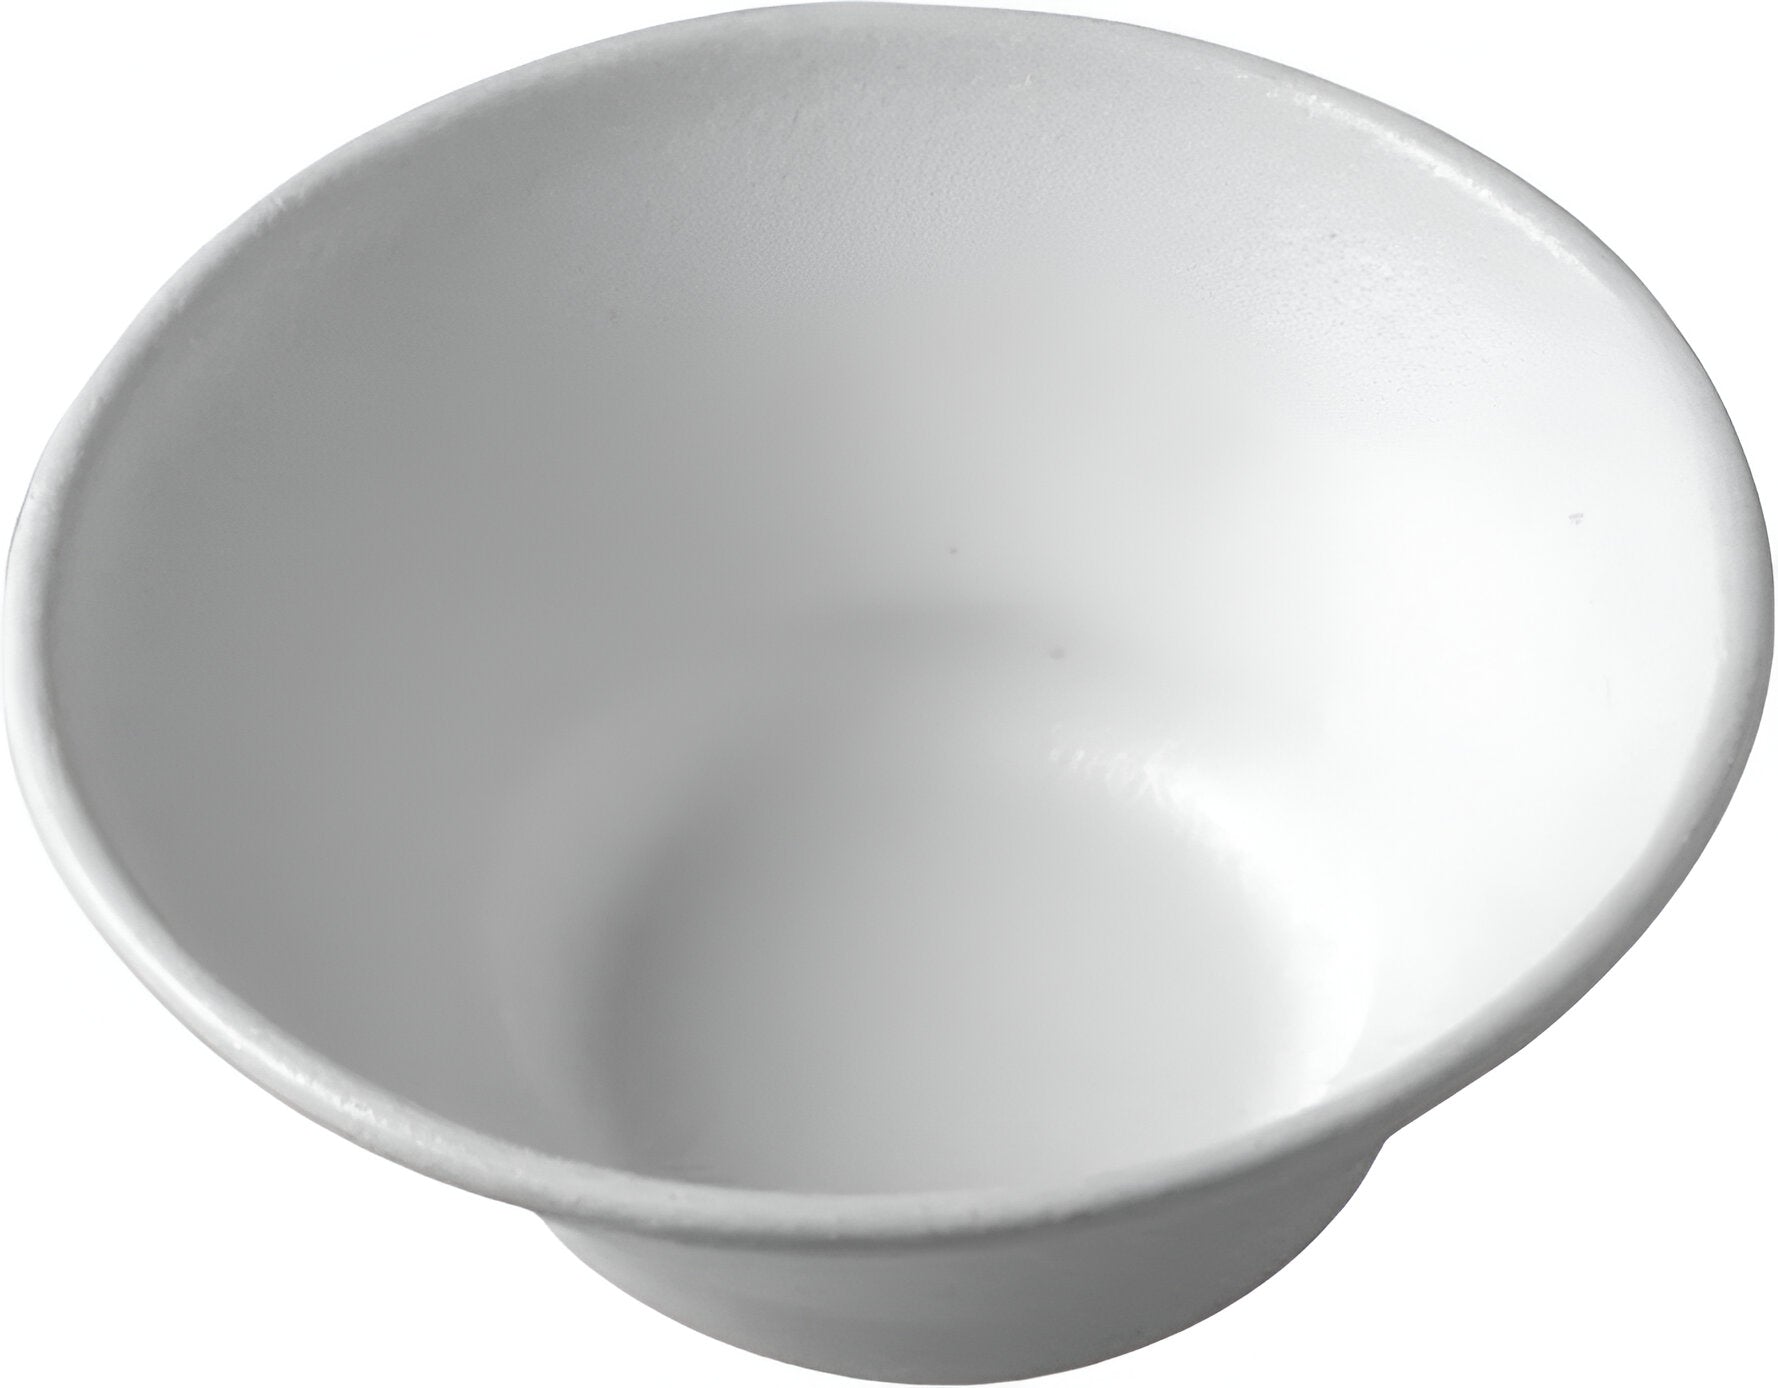 Bugambilia - Mod 10" Large Round White Bowl With Glossy Smooth Finish - FRD04-MOD-WW